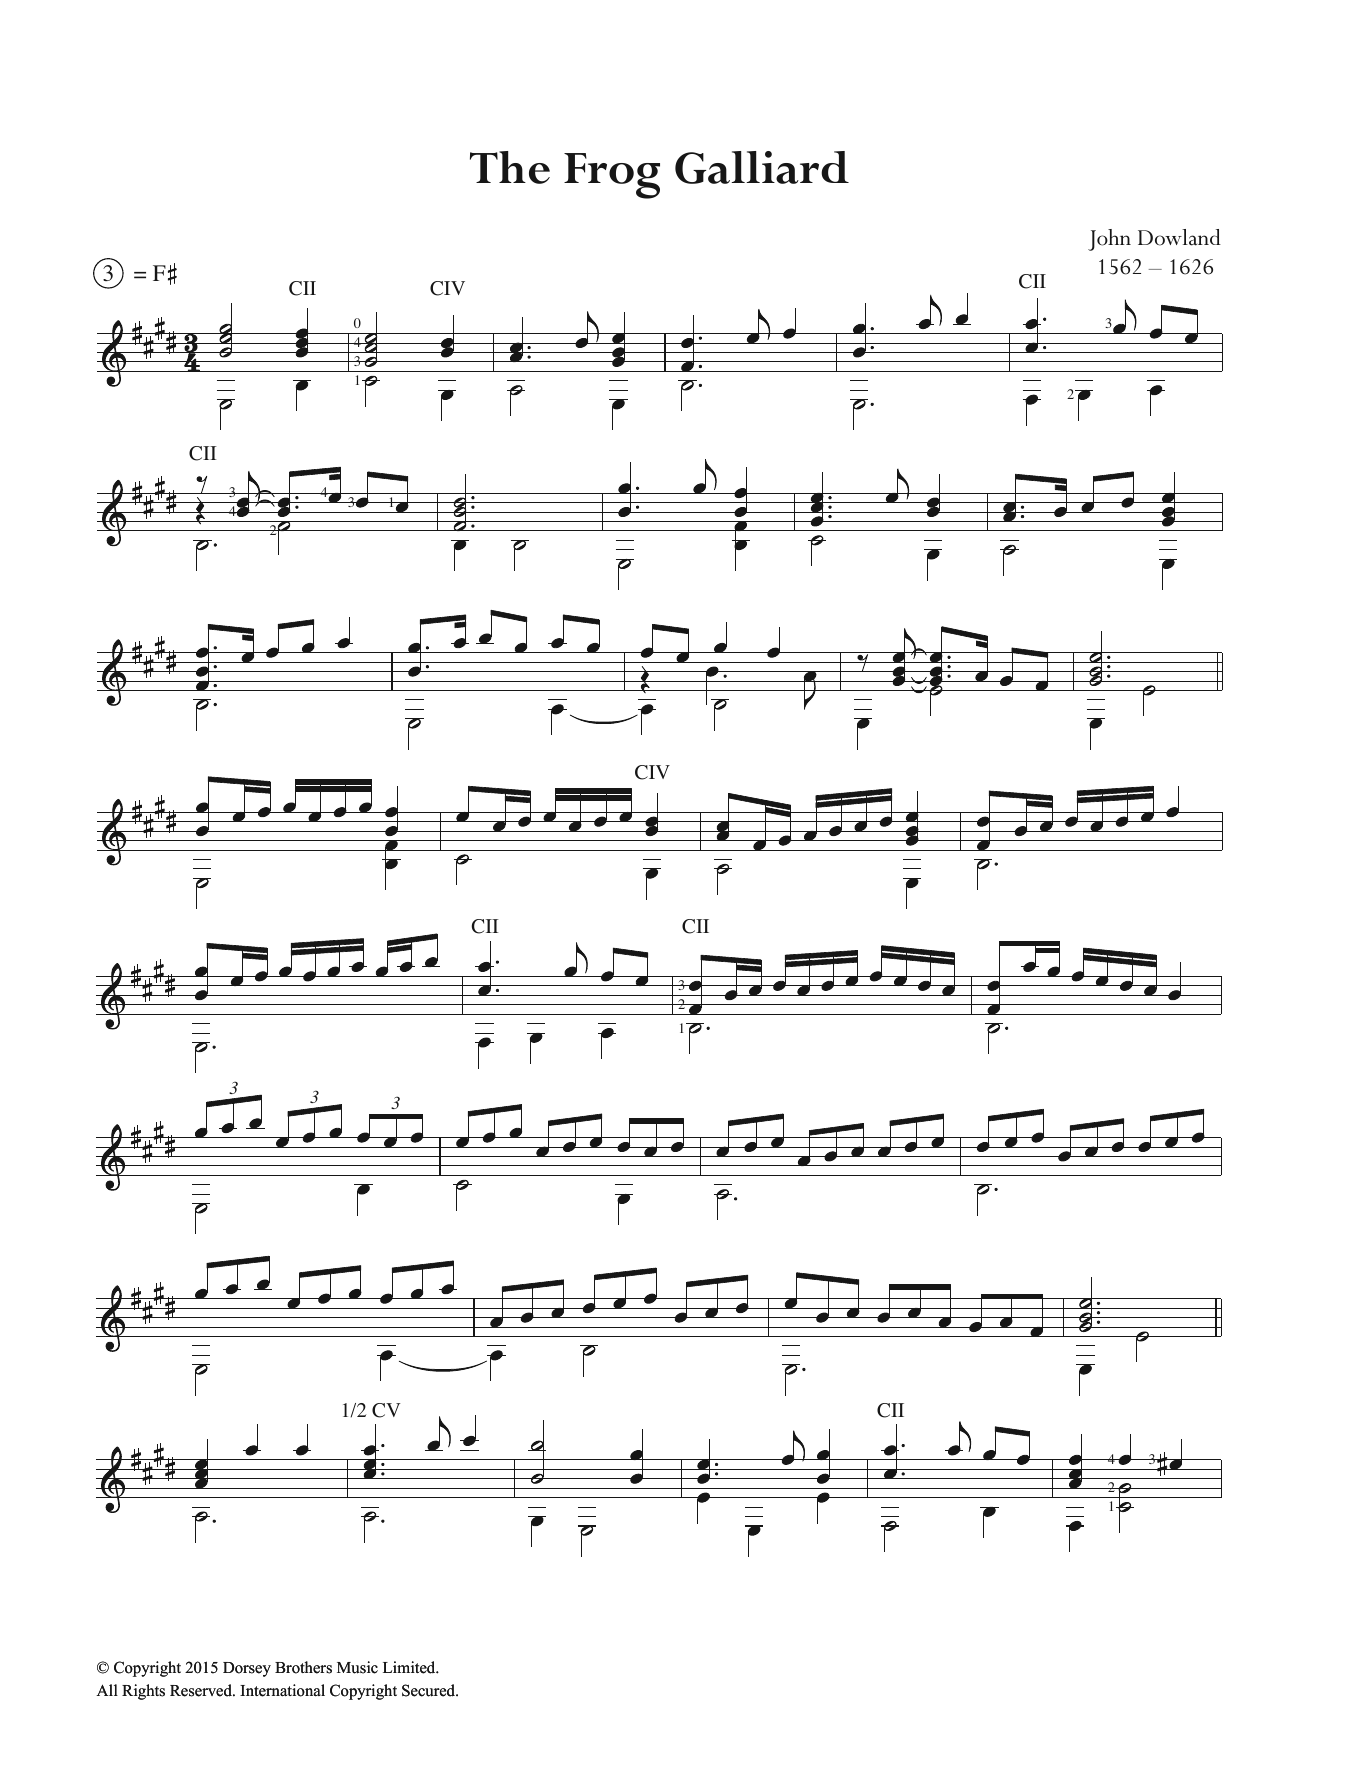 John Dowland The Frog Galliard sheet music notes and chords. Download Printable PDF.